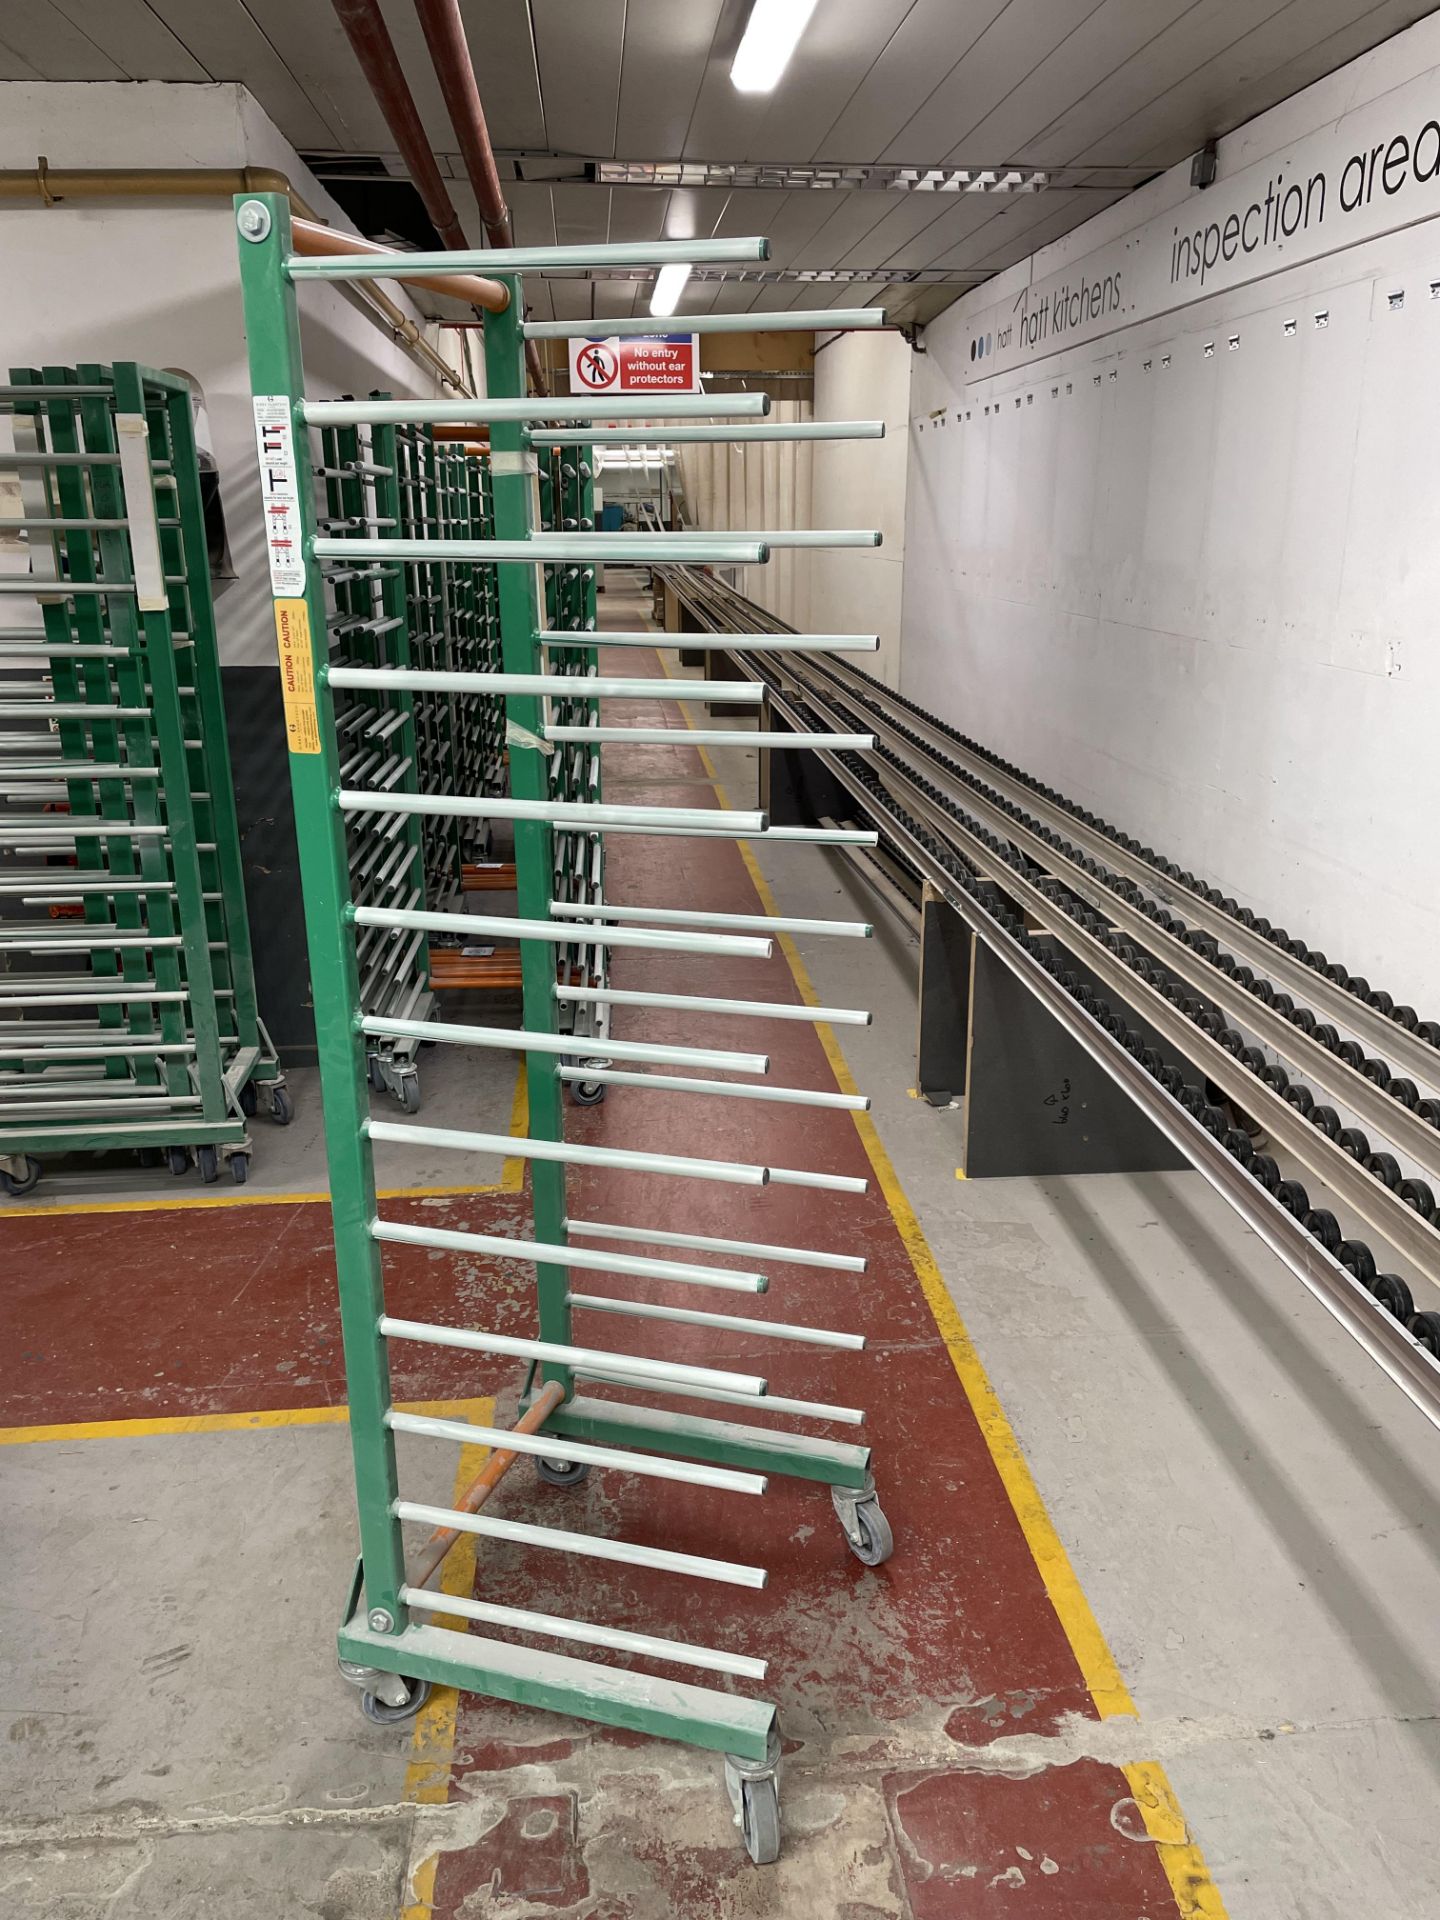 9 x Gibbs Sandtech 13 bar standard spray drying racks, 13 bars per upright, max. load per pair of